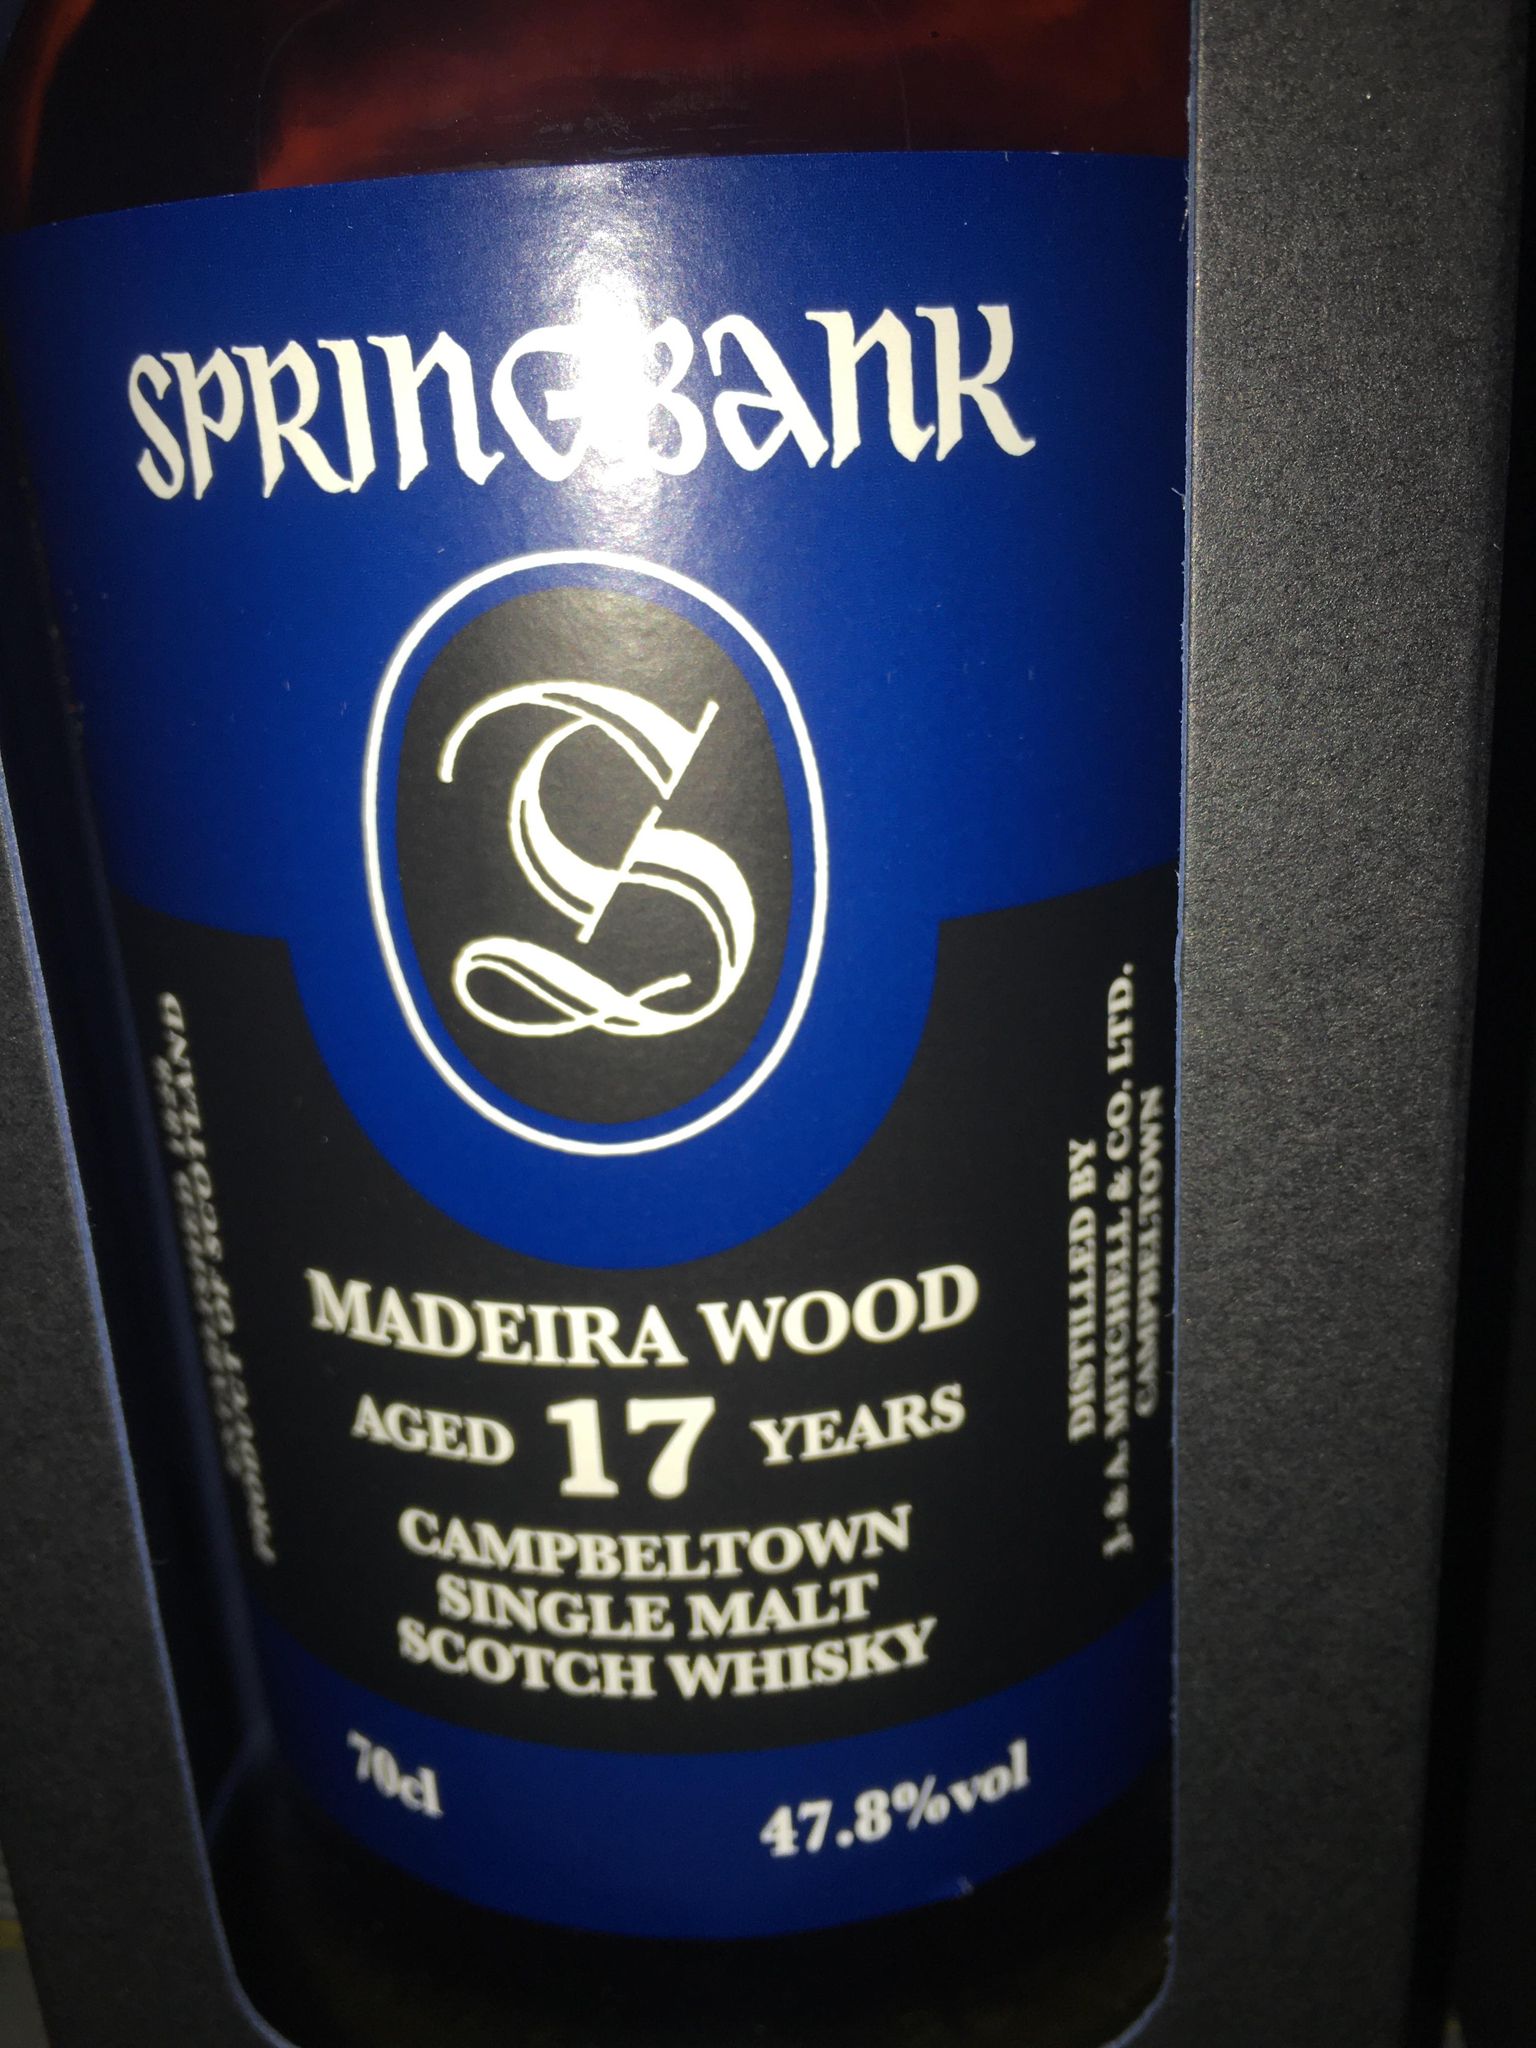 Springbank 17 years 47,8% 9200 bottles private bottle